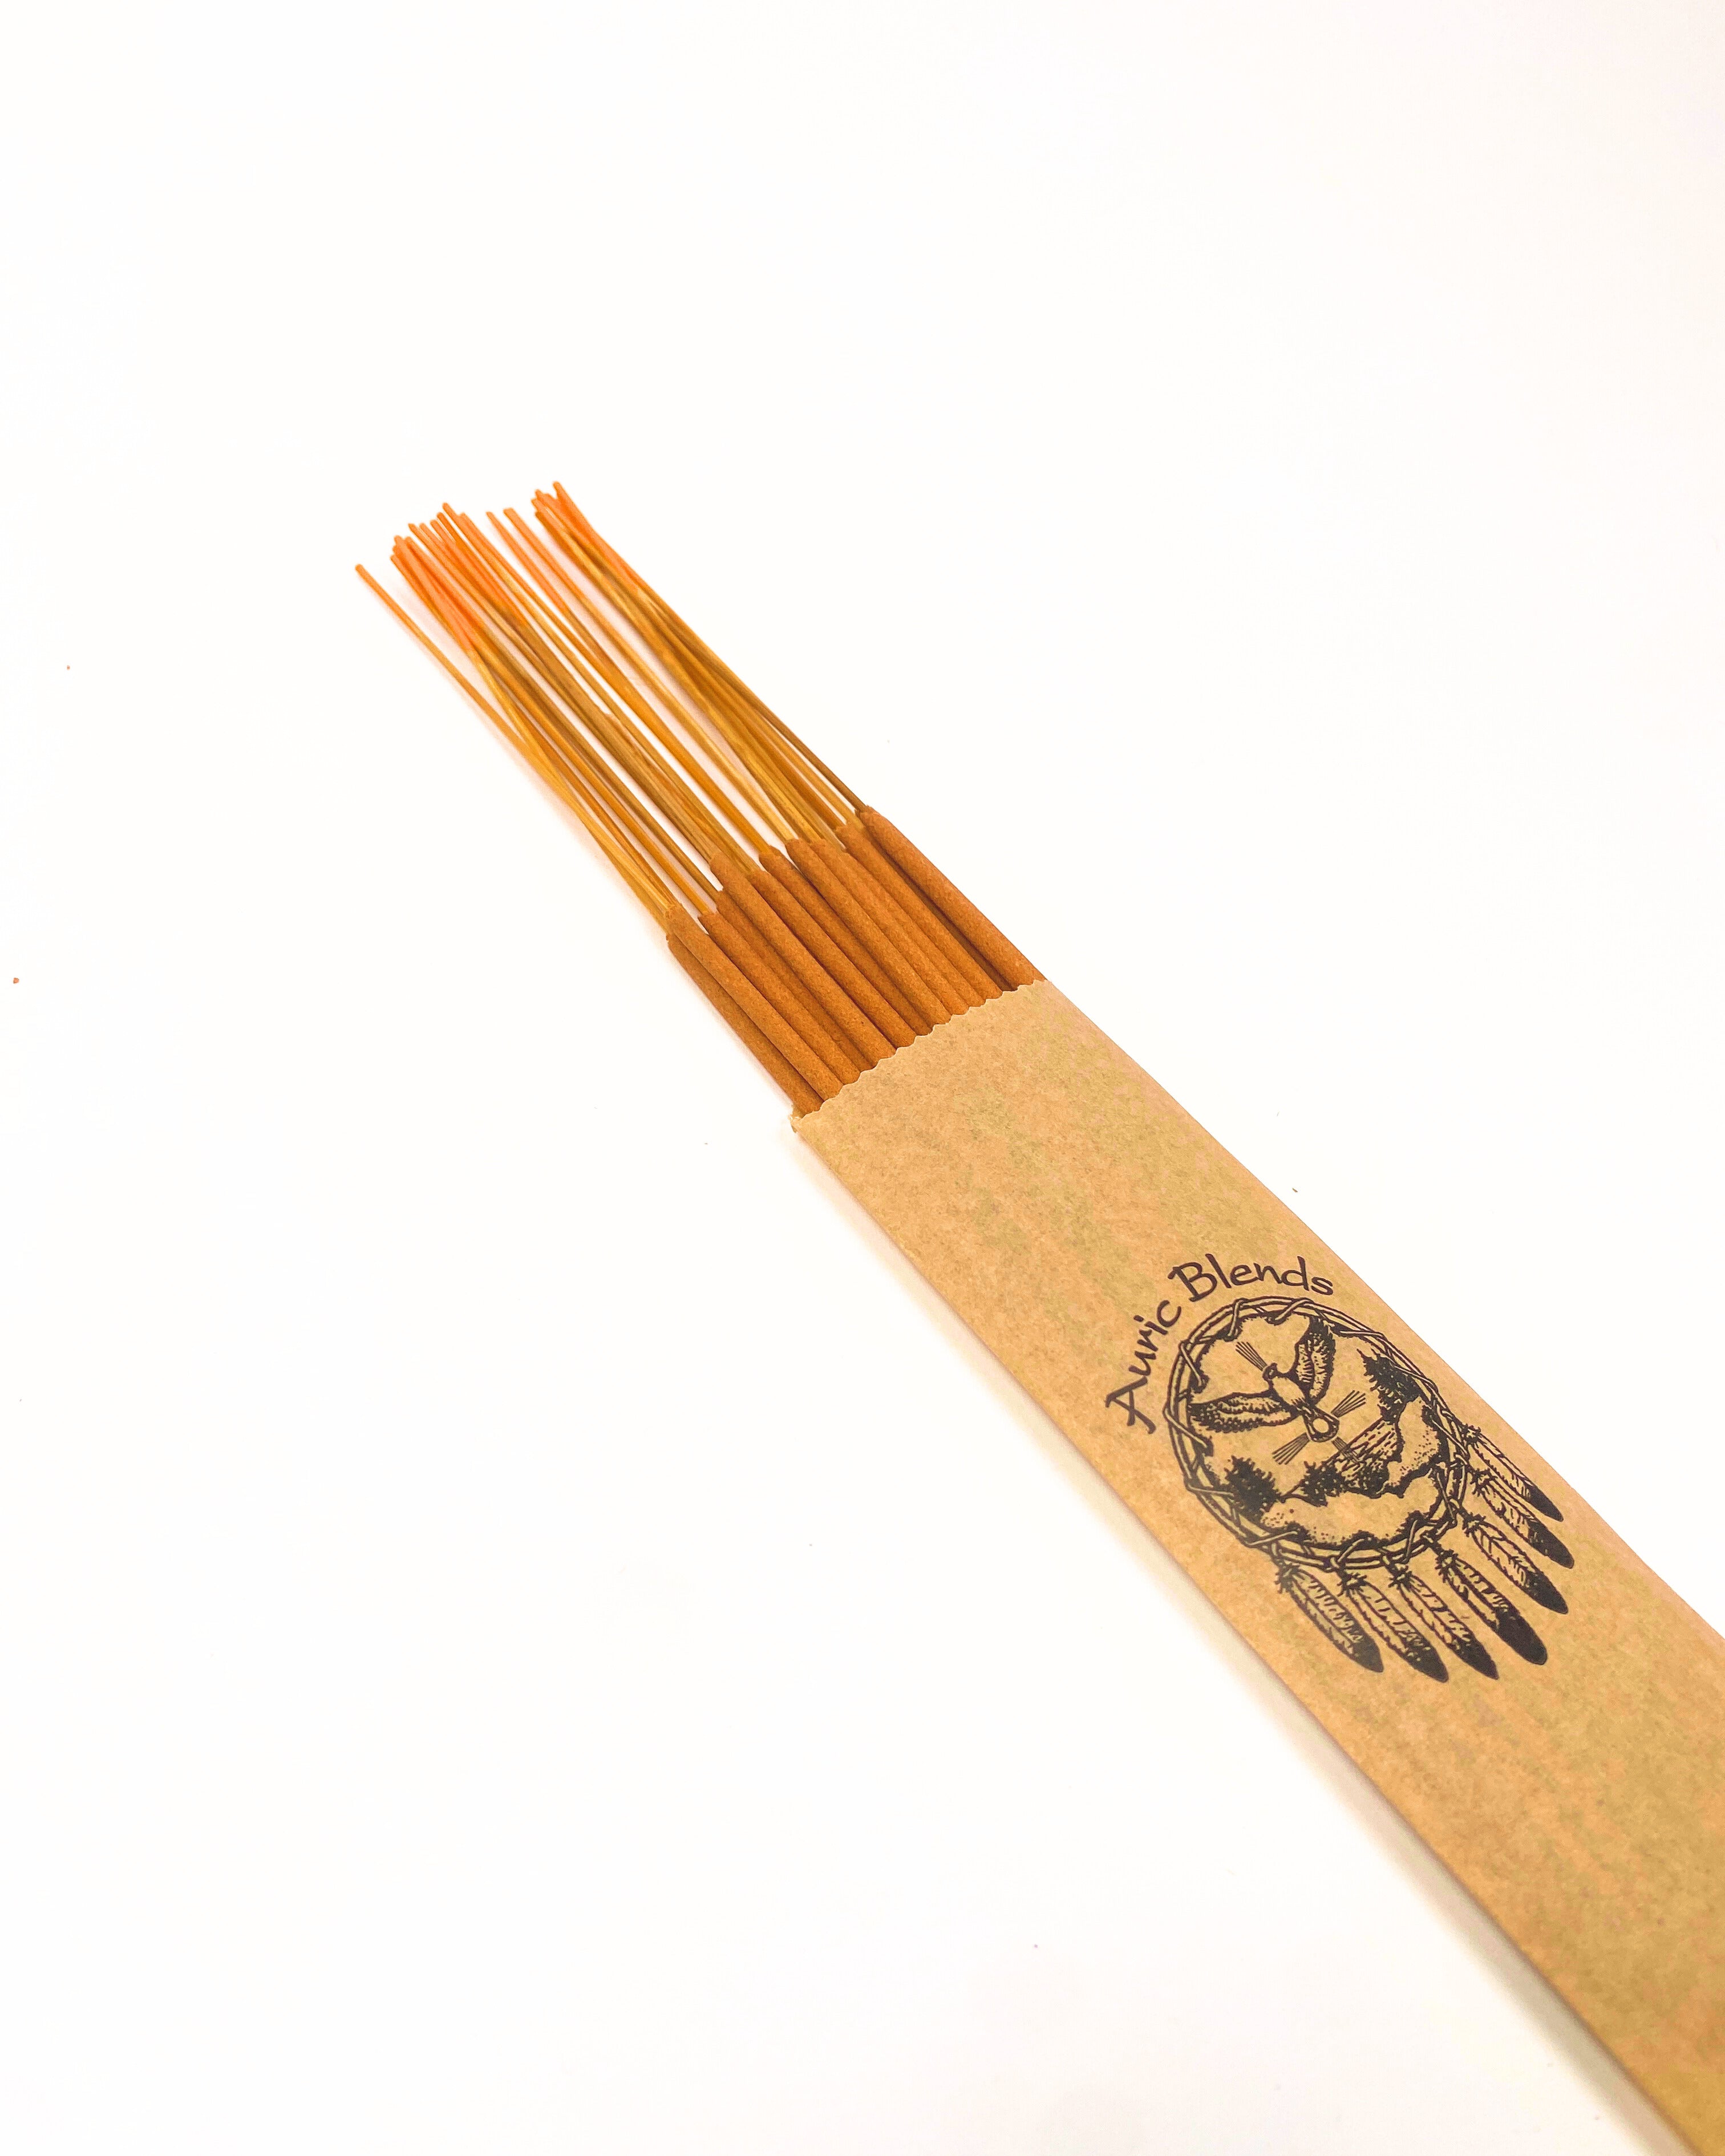 Amber Incense Sticks